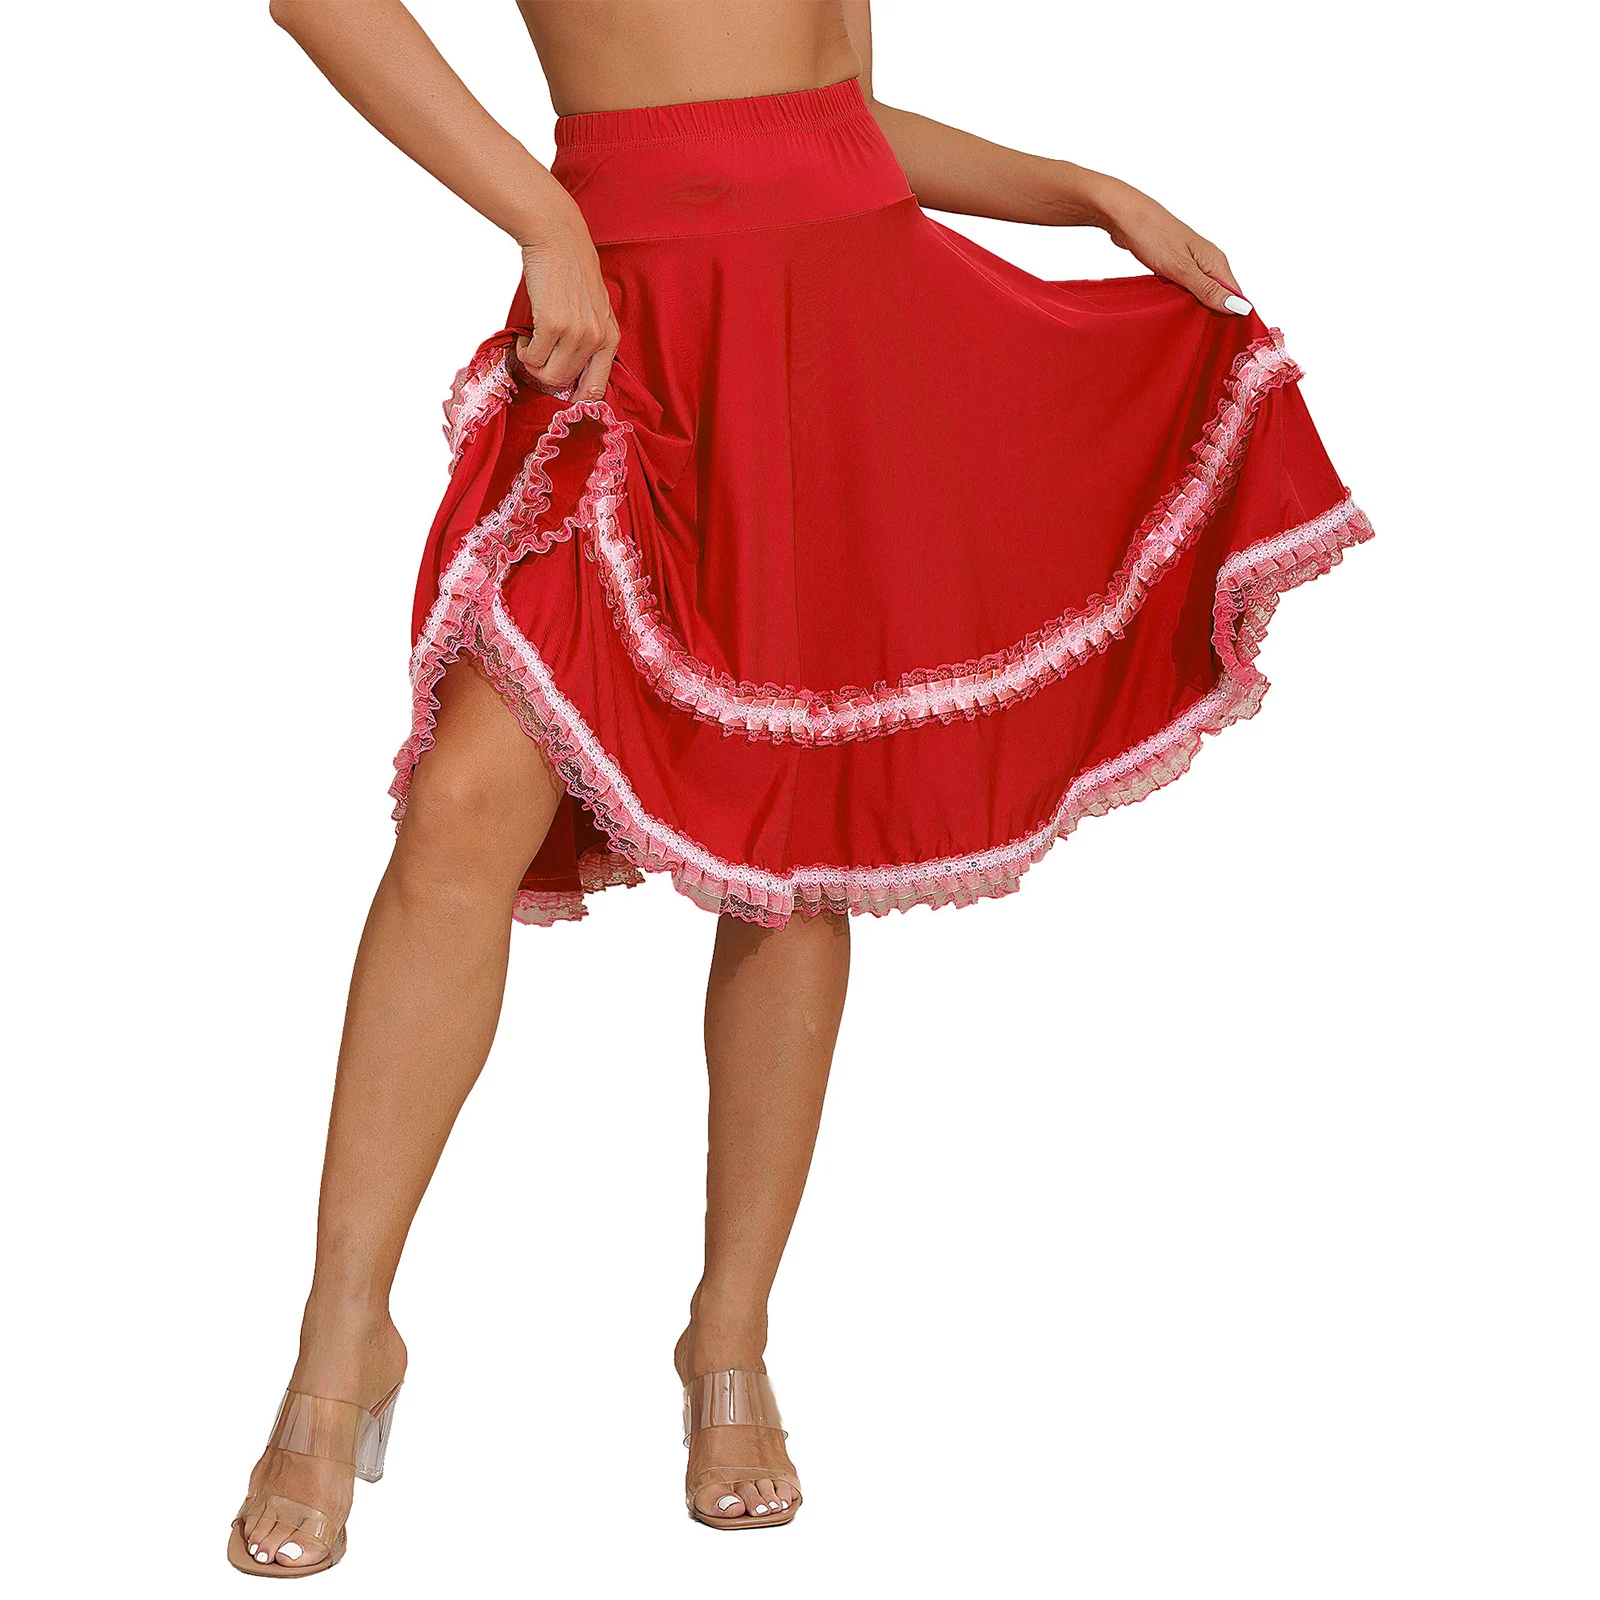 

Womens Lace Frilly Ballroom Dance Skirt High Waist Elastic Waistband Flared Midi Skirts Rumba Flamenco Stage Performance Costume